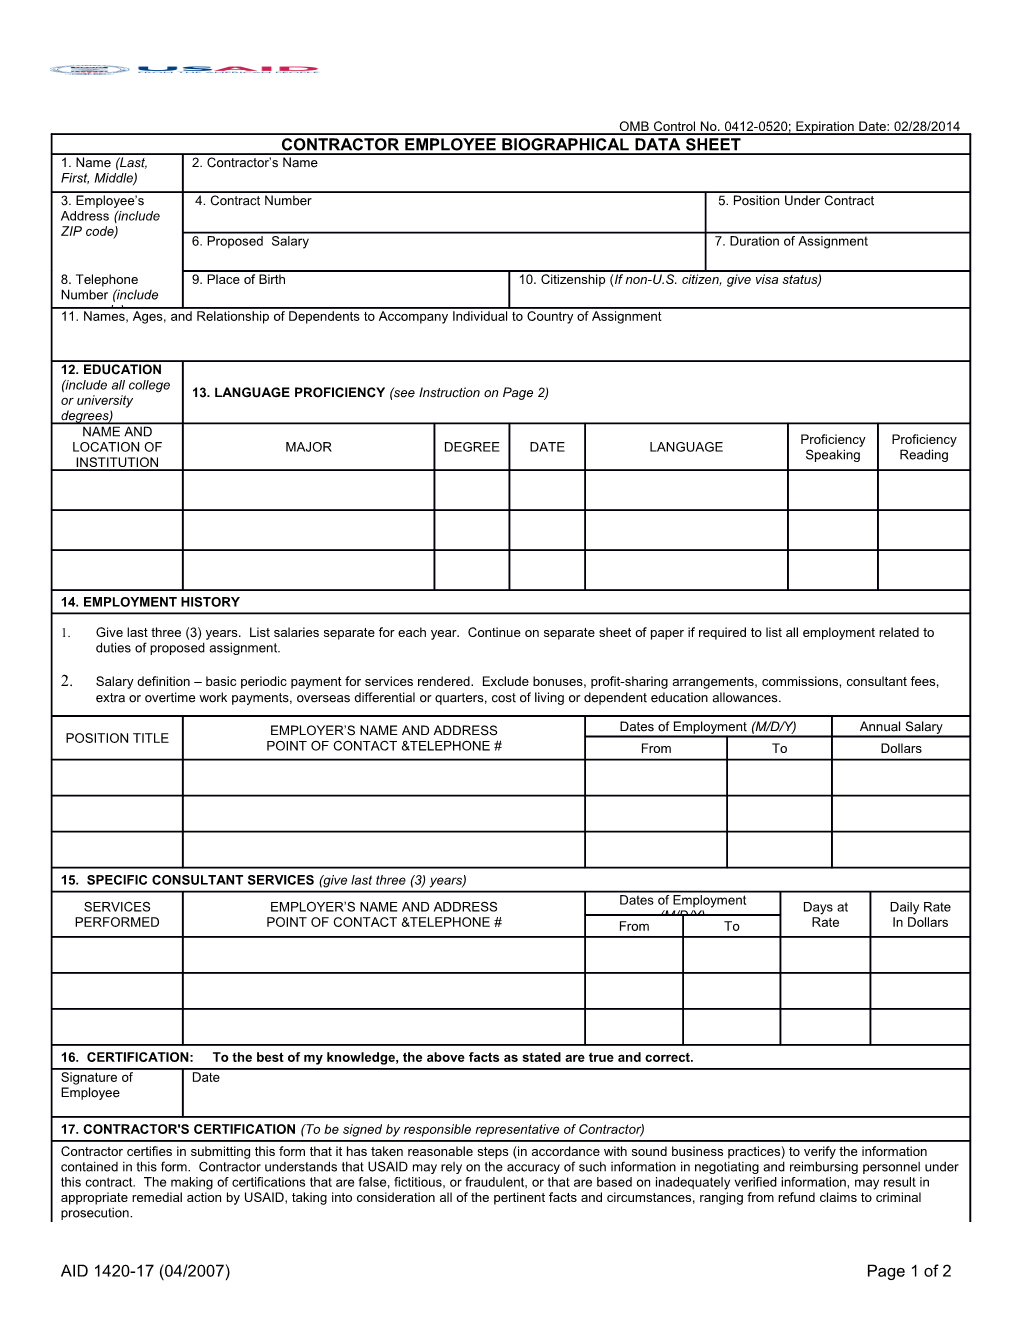 Contractor Employee Biographical Data Sheet s1